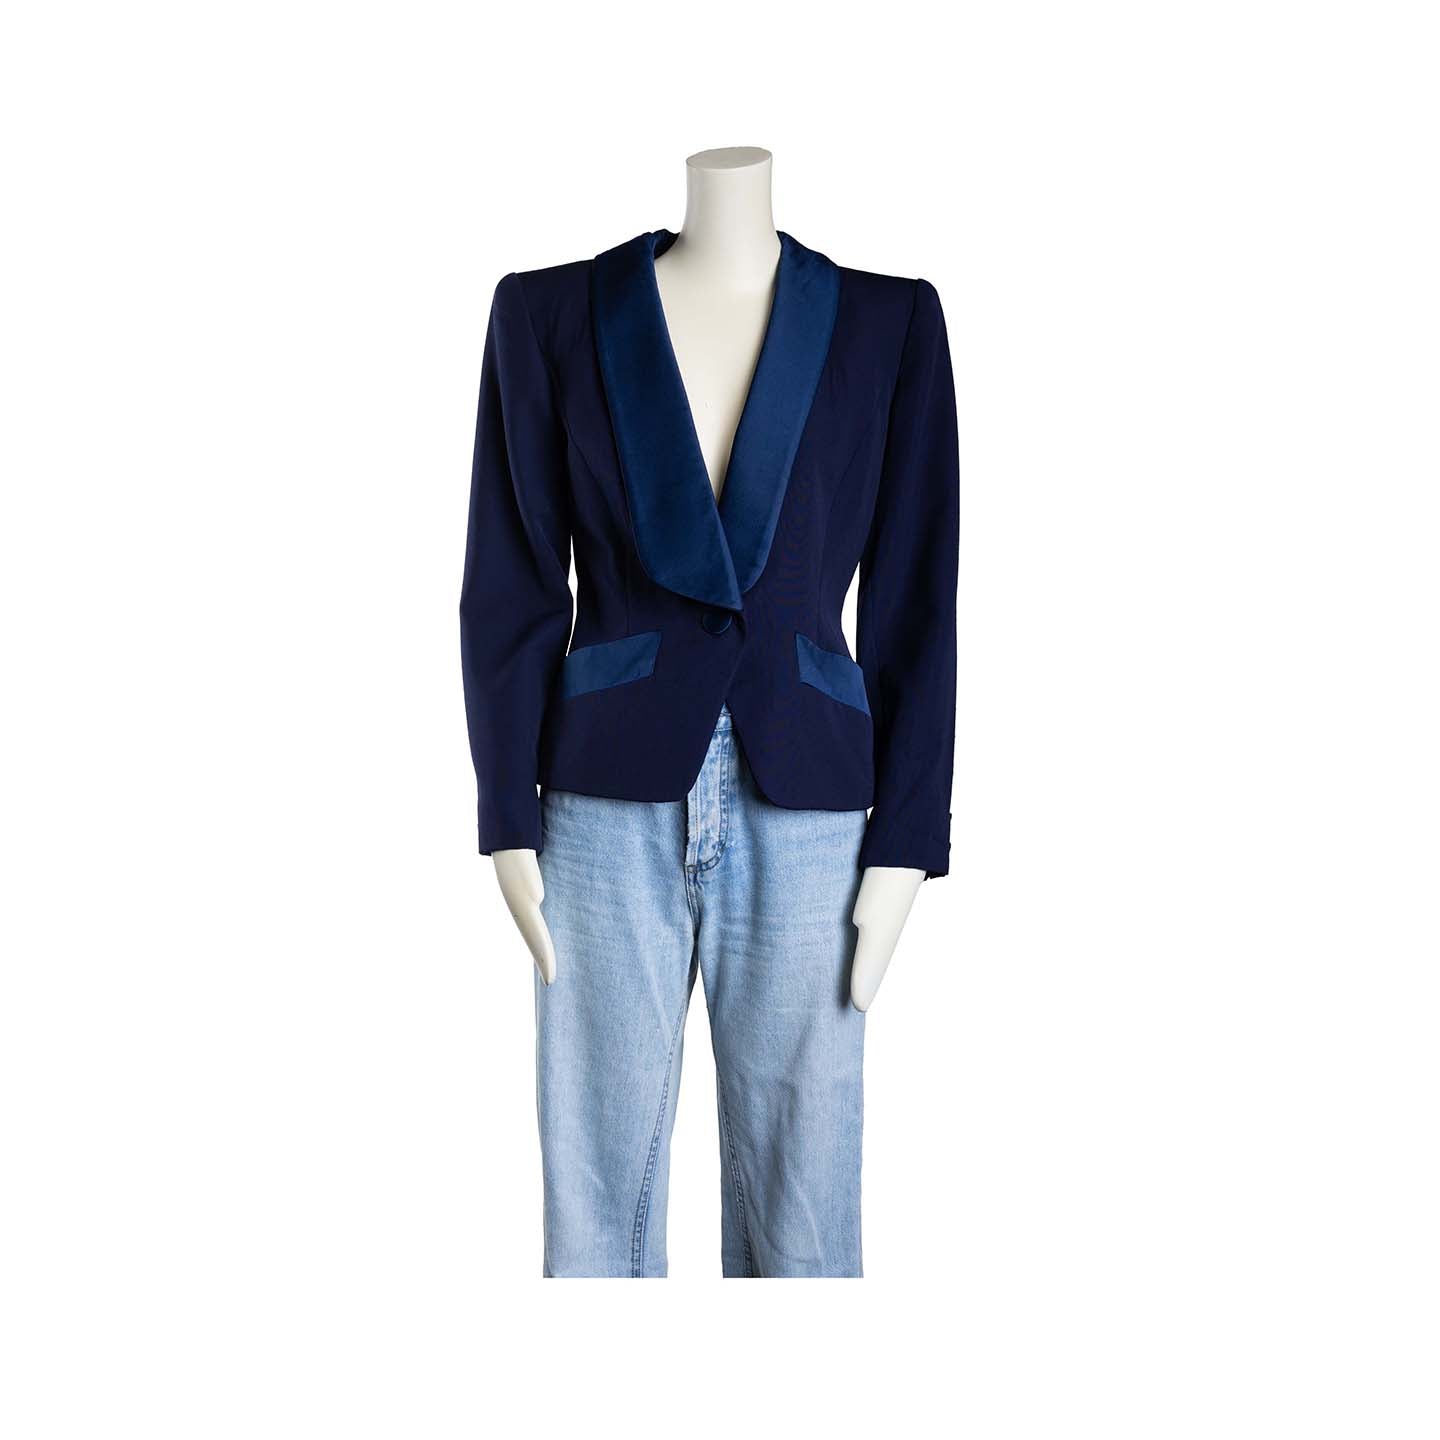 Lysis vintage Saint Laurent Tuxedo blazer in navy blue wool and satin - M - 1980s